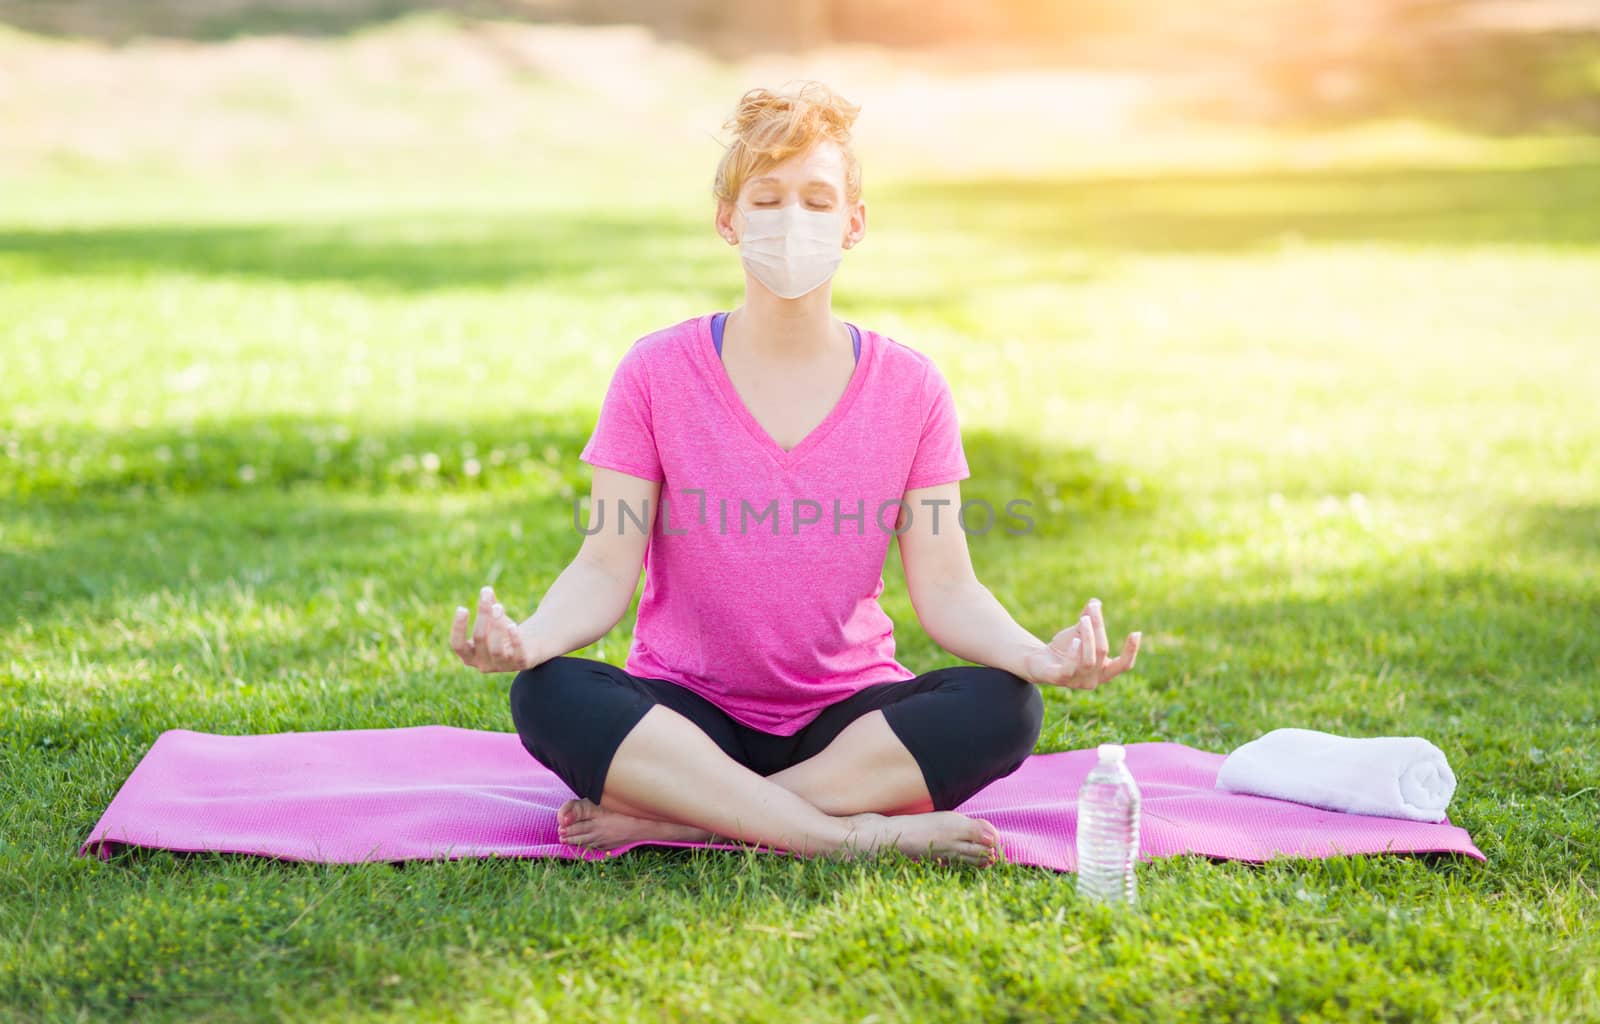 Girl Wearing Medical Face Mask During Yoga Meditation Workout Outdoors.